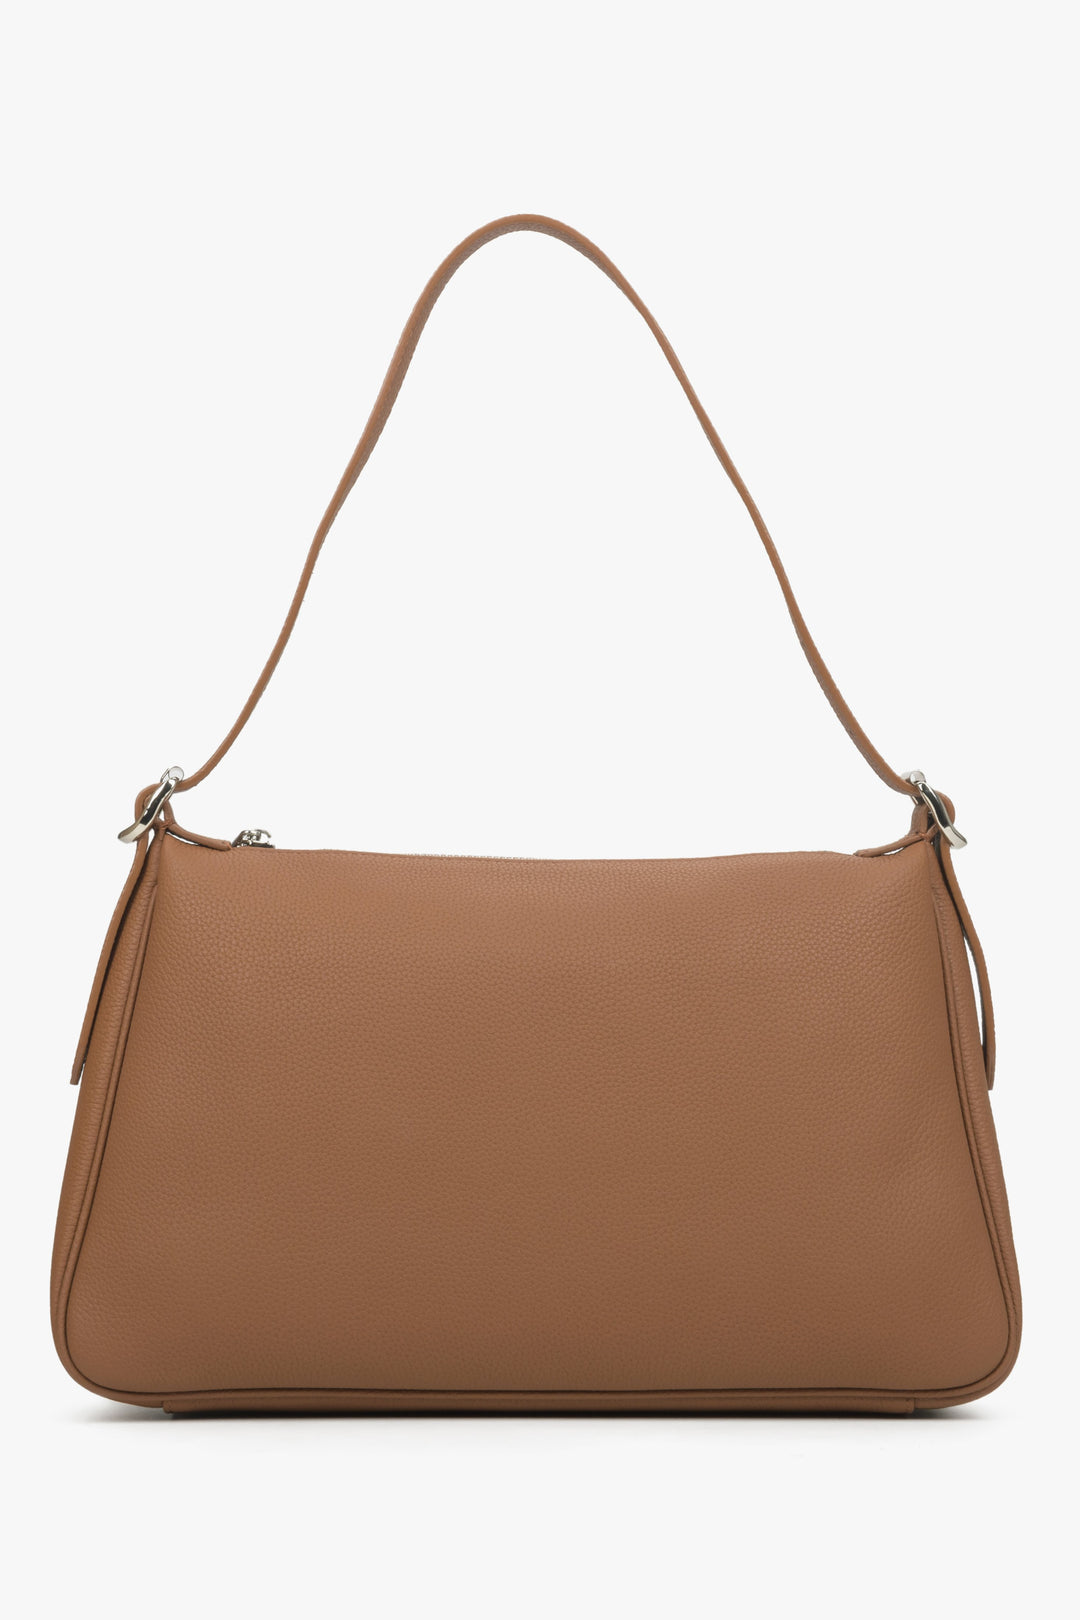 Women's brown Estro handbag.